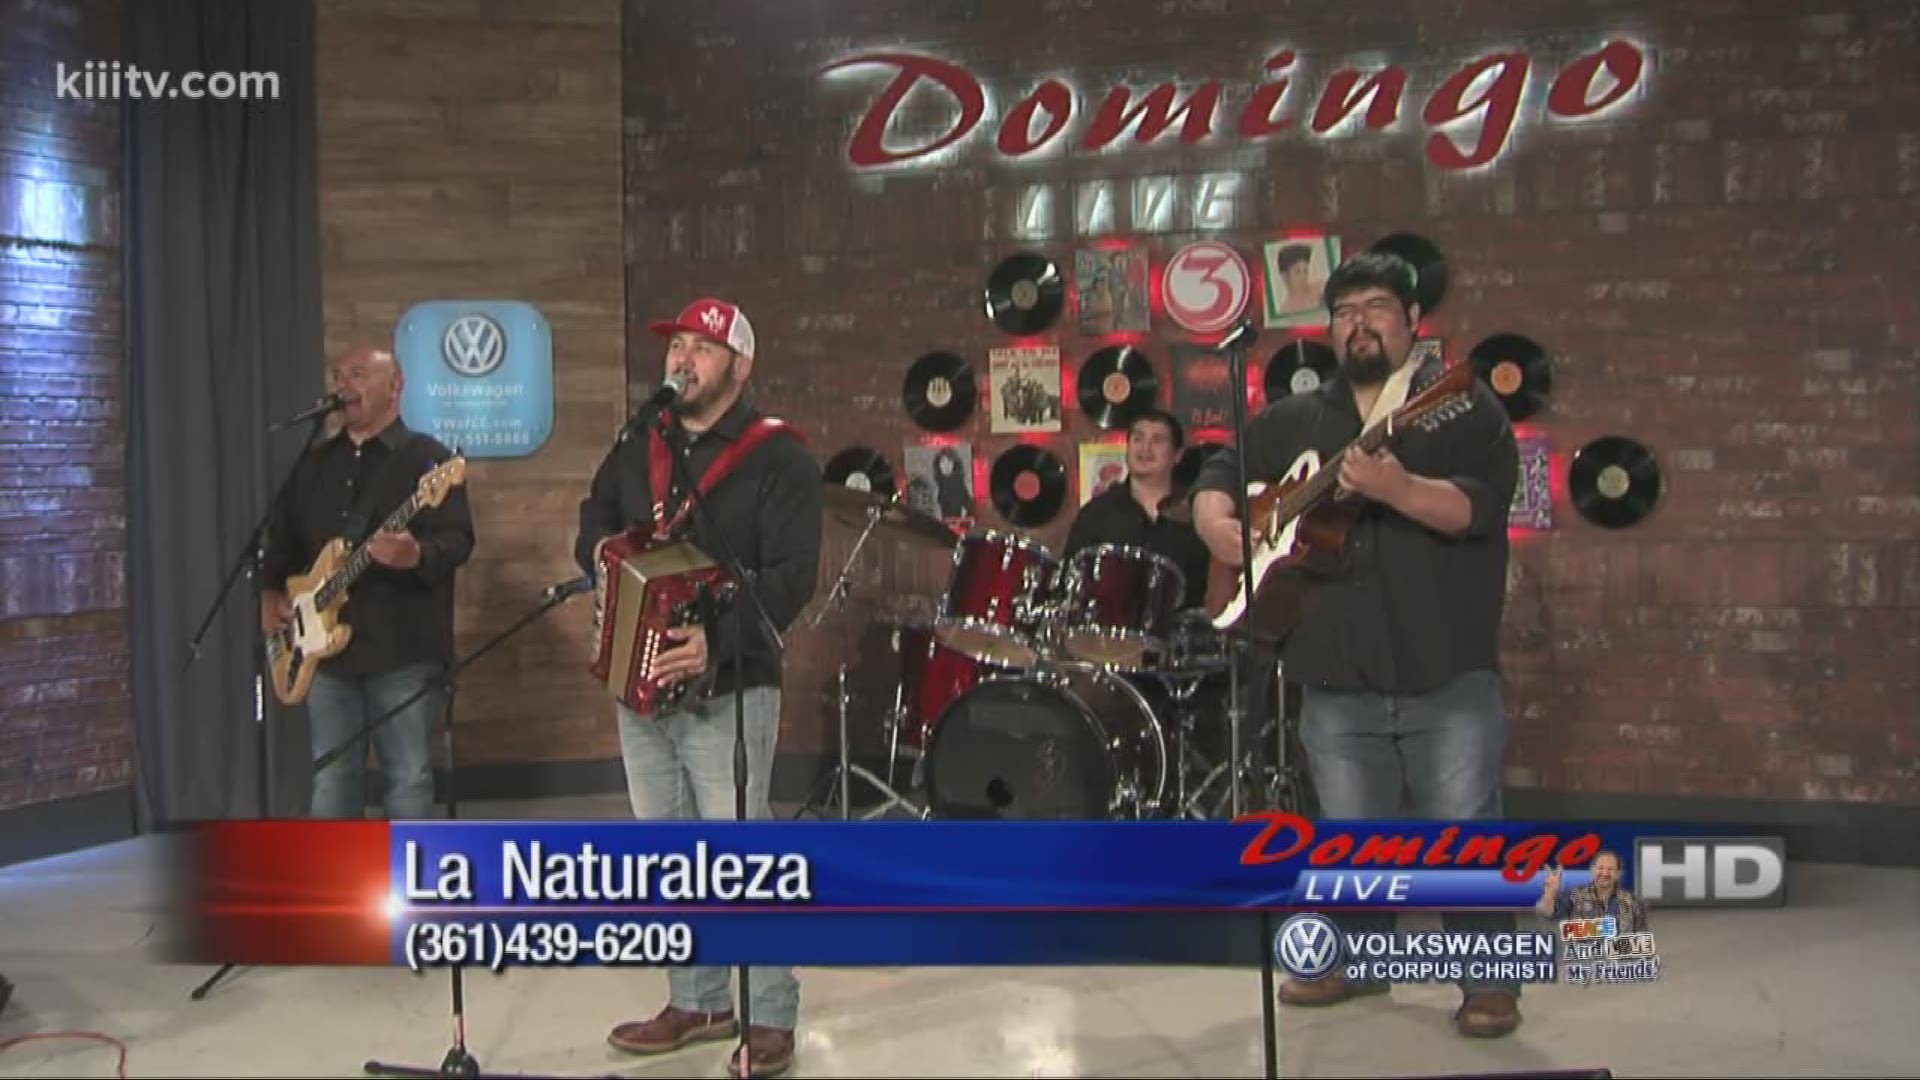 La Naturaleza performing "Dulce Amor" on Domingo Live.